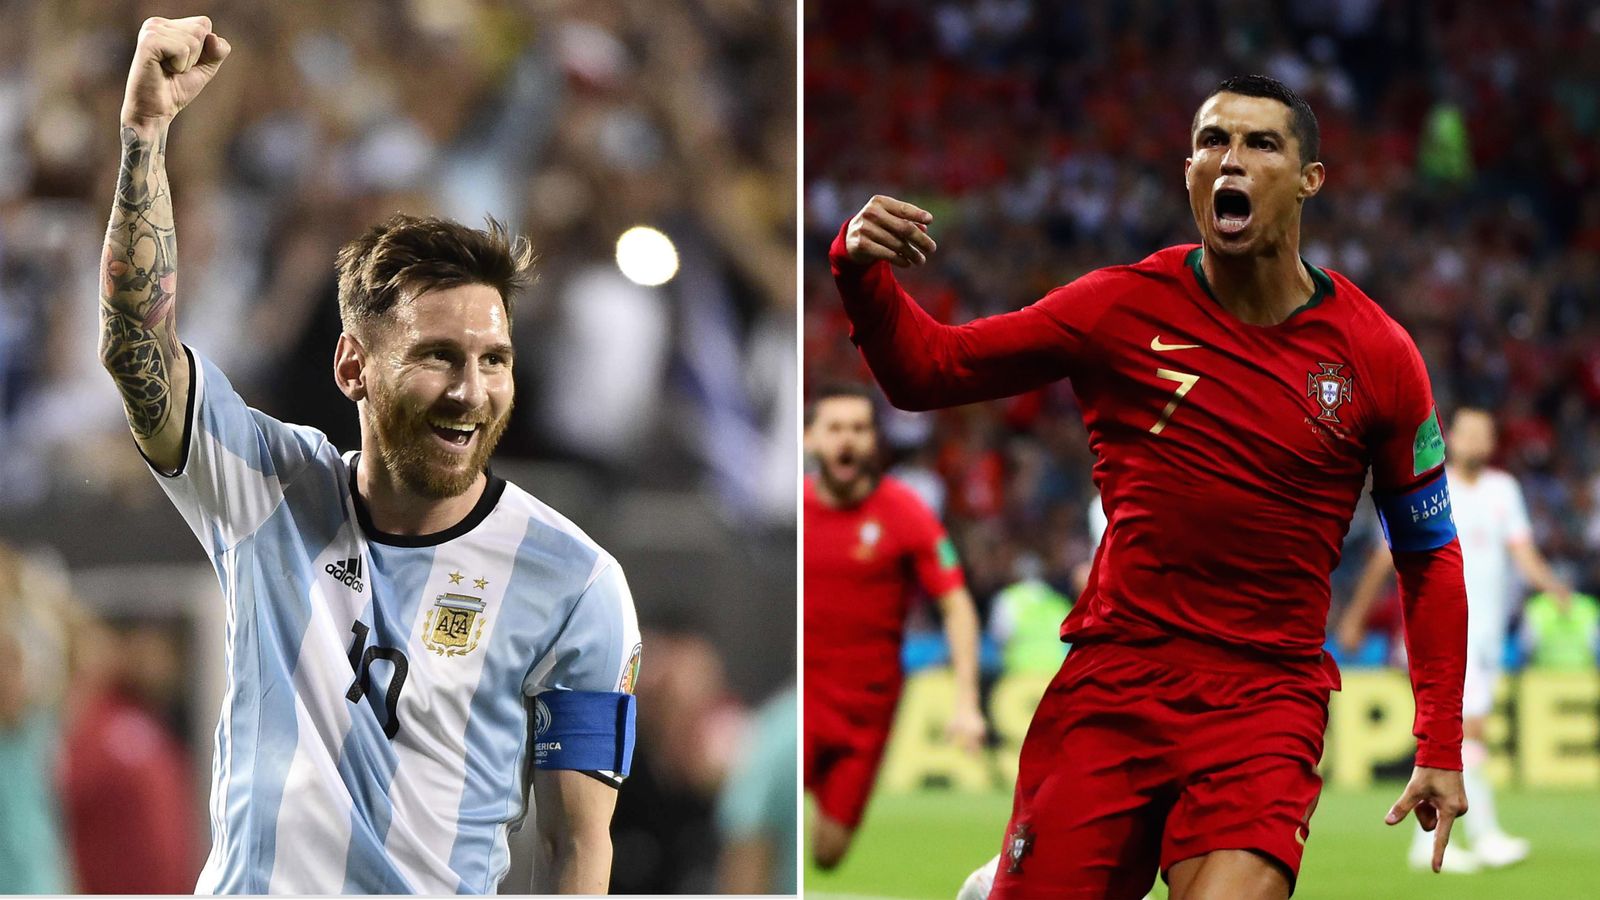 Lionel Messi versus Cristiano Ronaldo Who is football's greatest